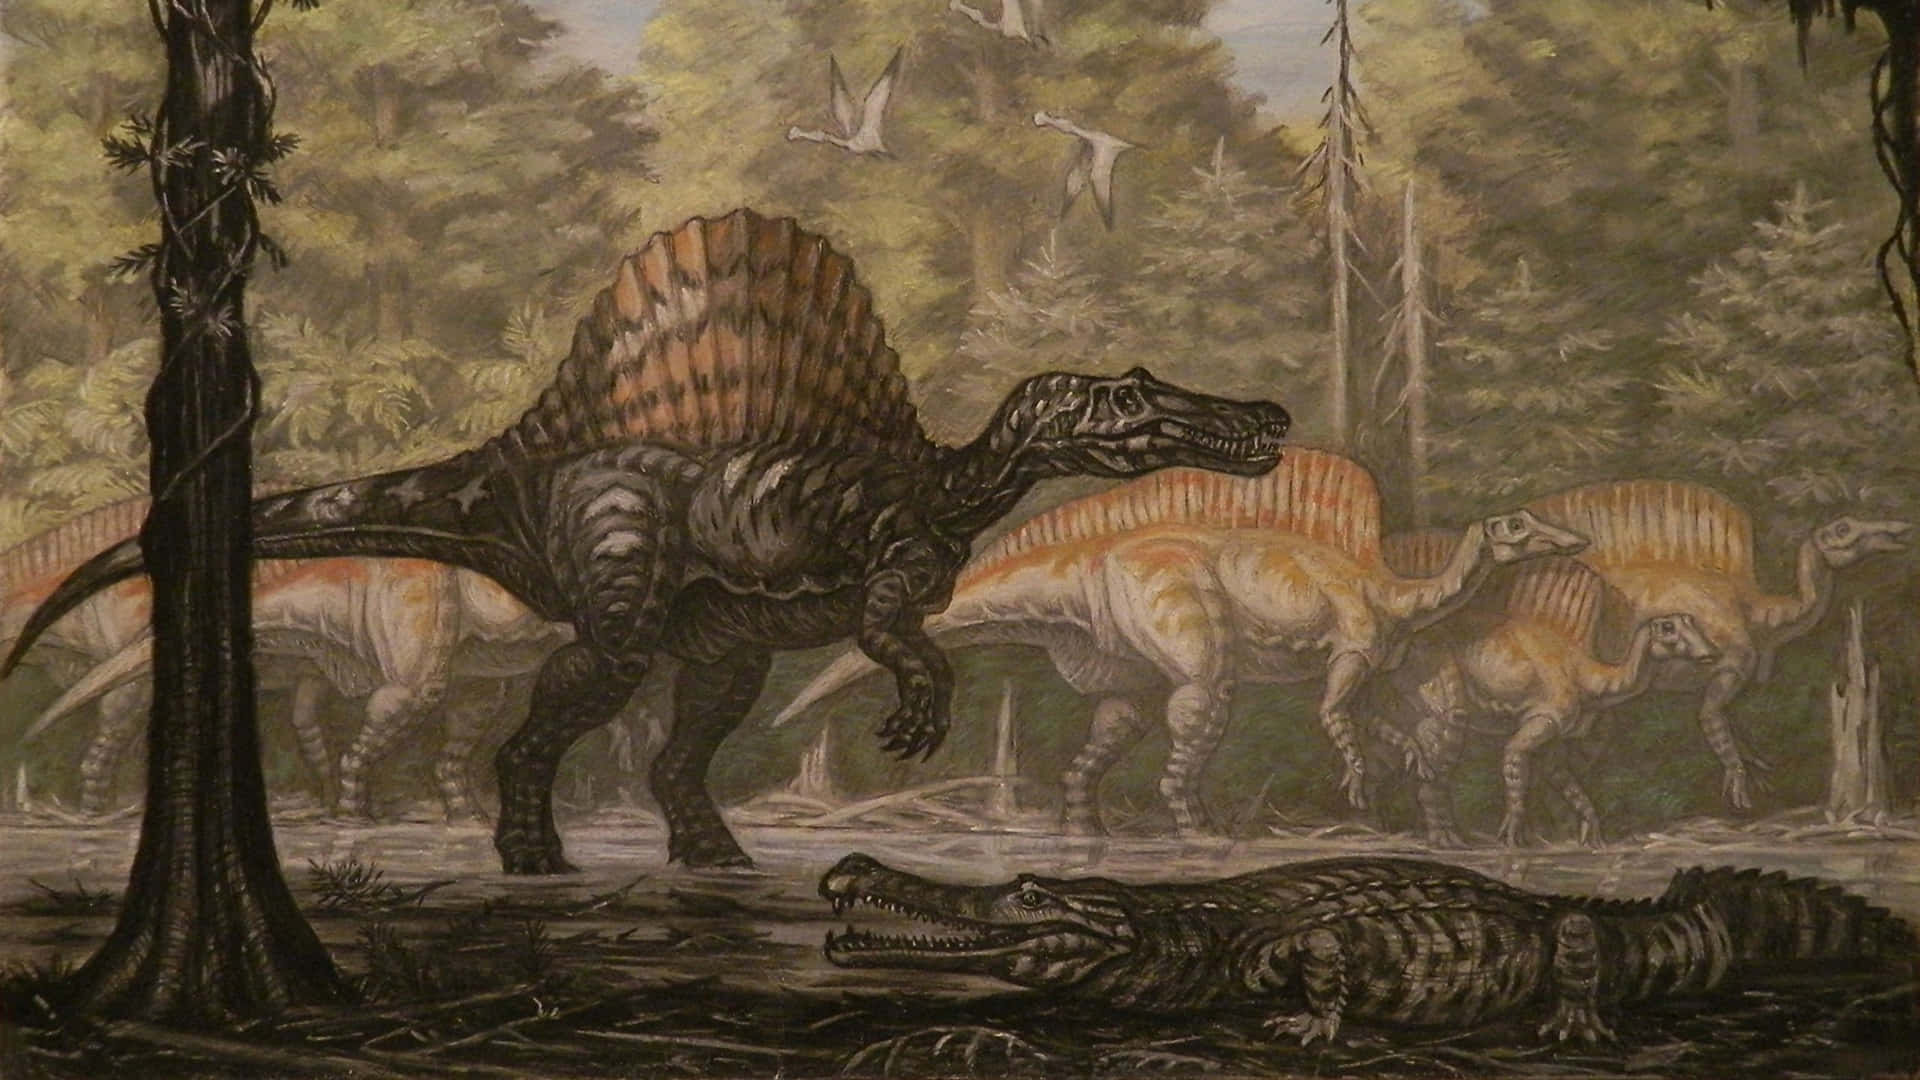 Unprimer Plano Del Extinto Spinosaurus. Fondo de pantalla